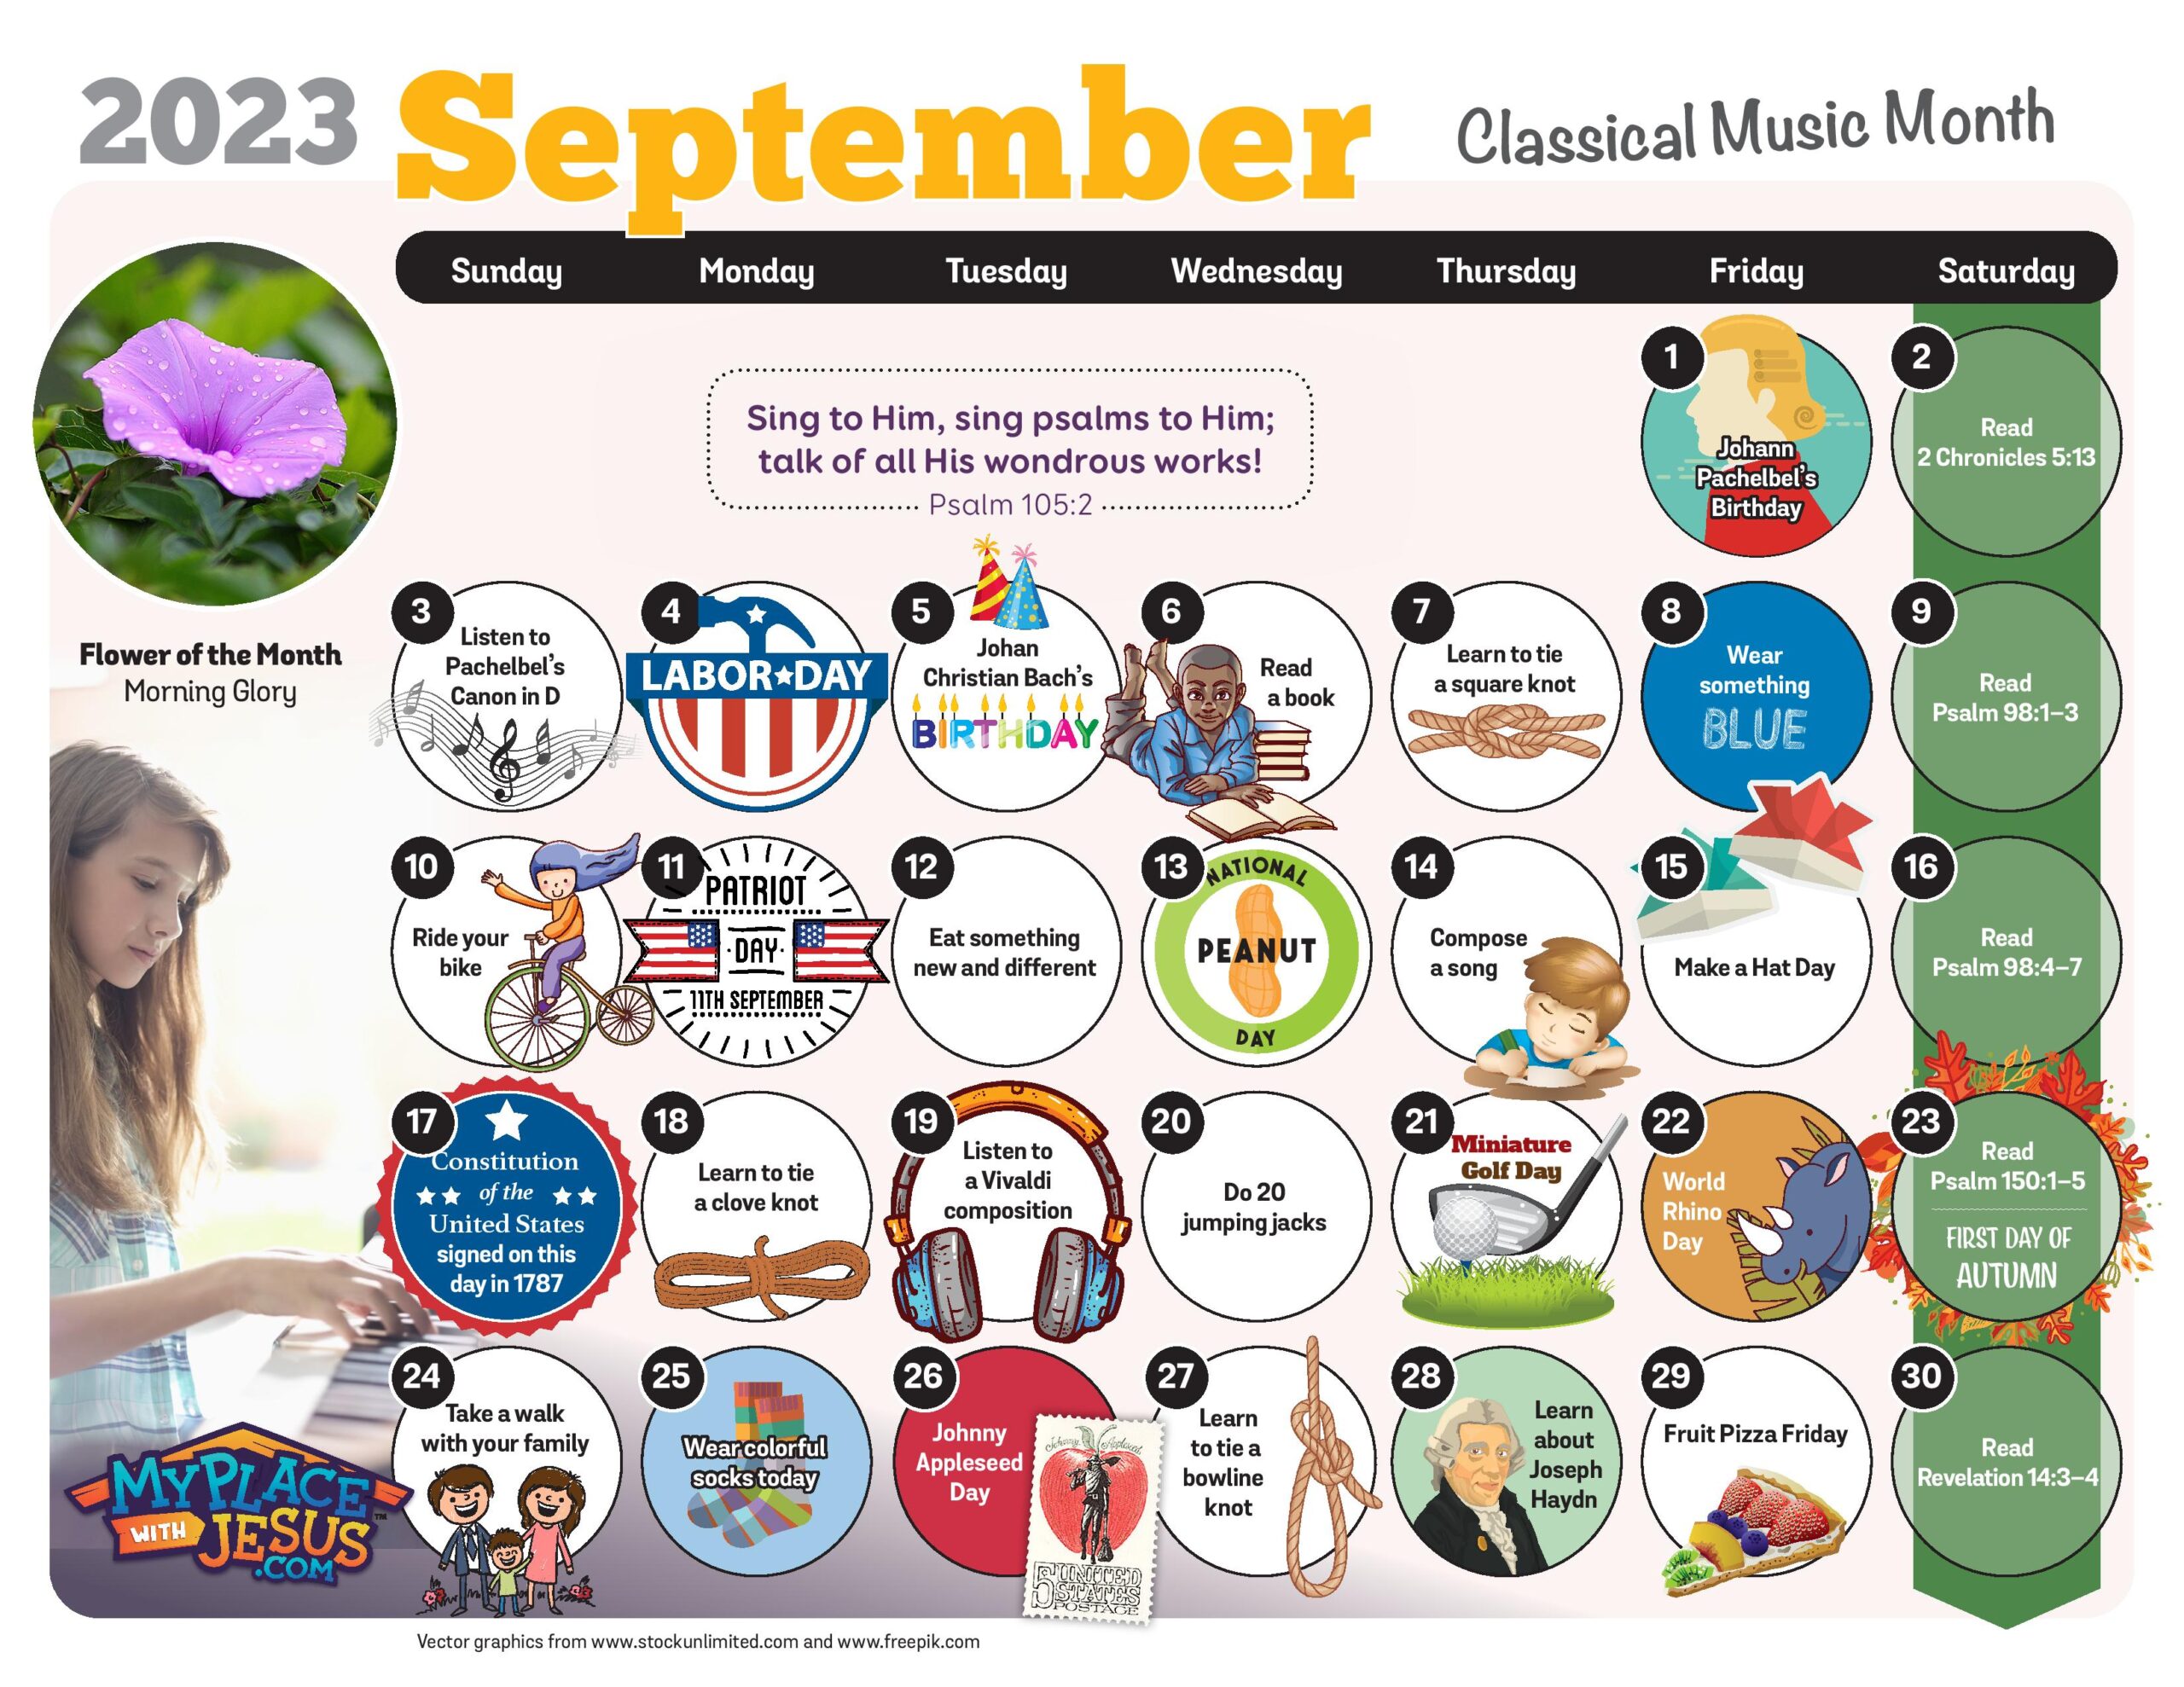 Download the September Activity Calendar